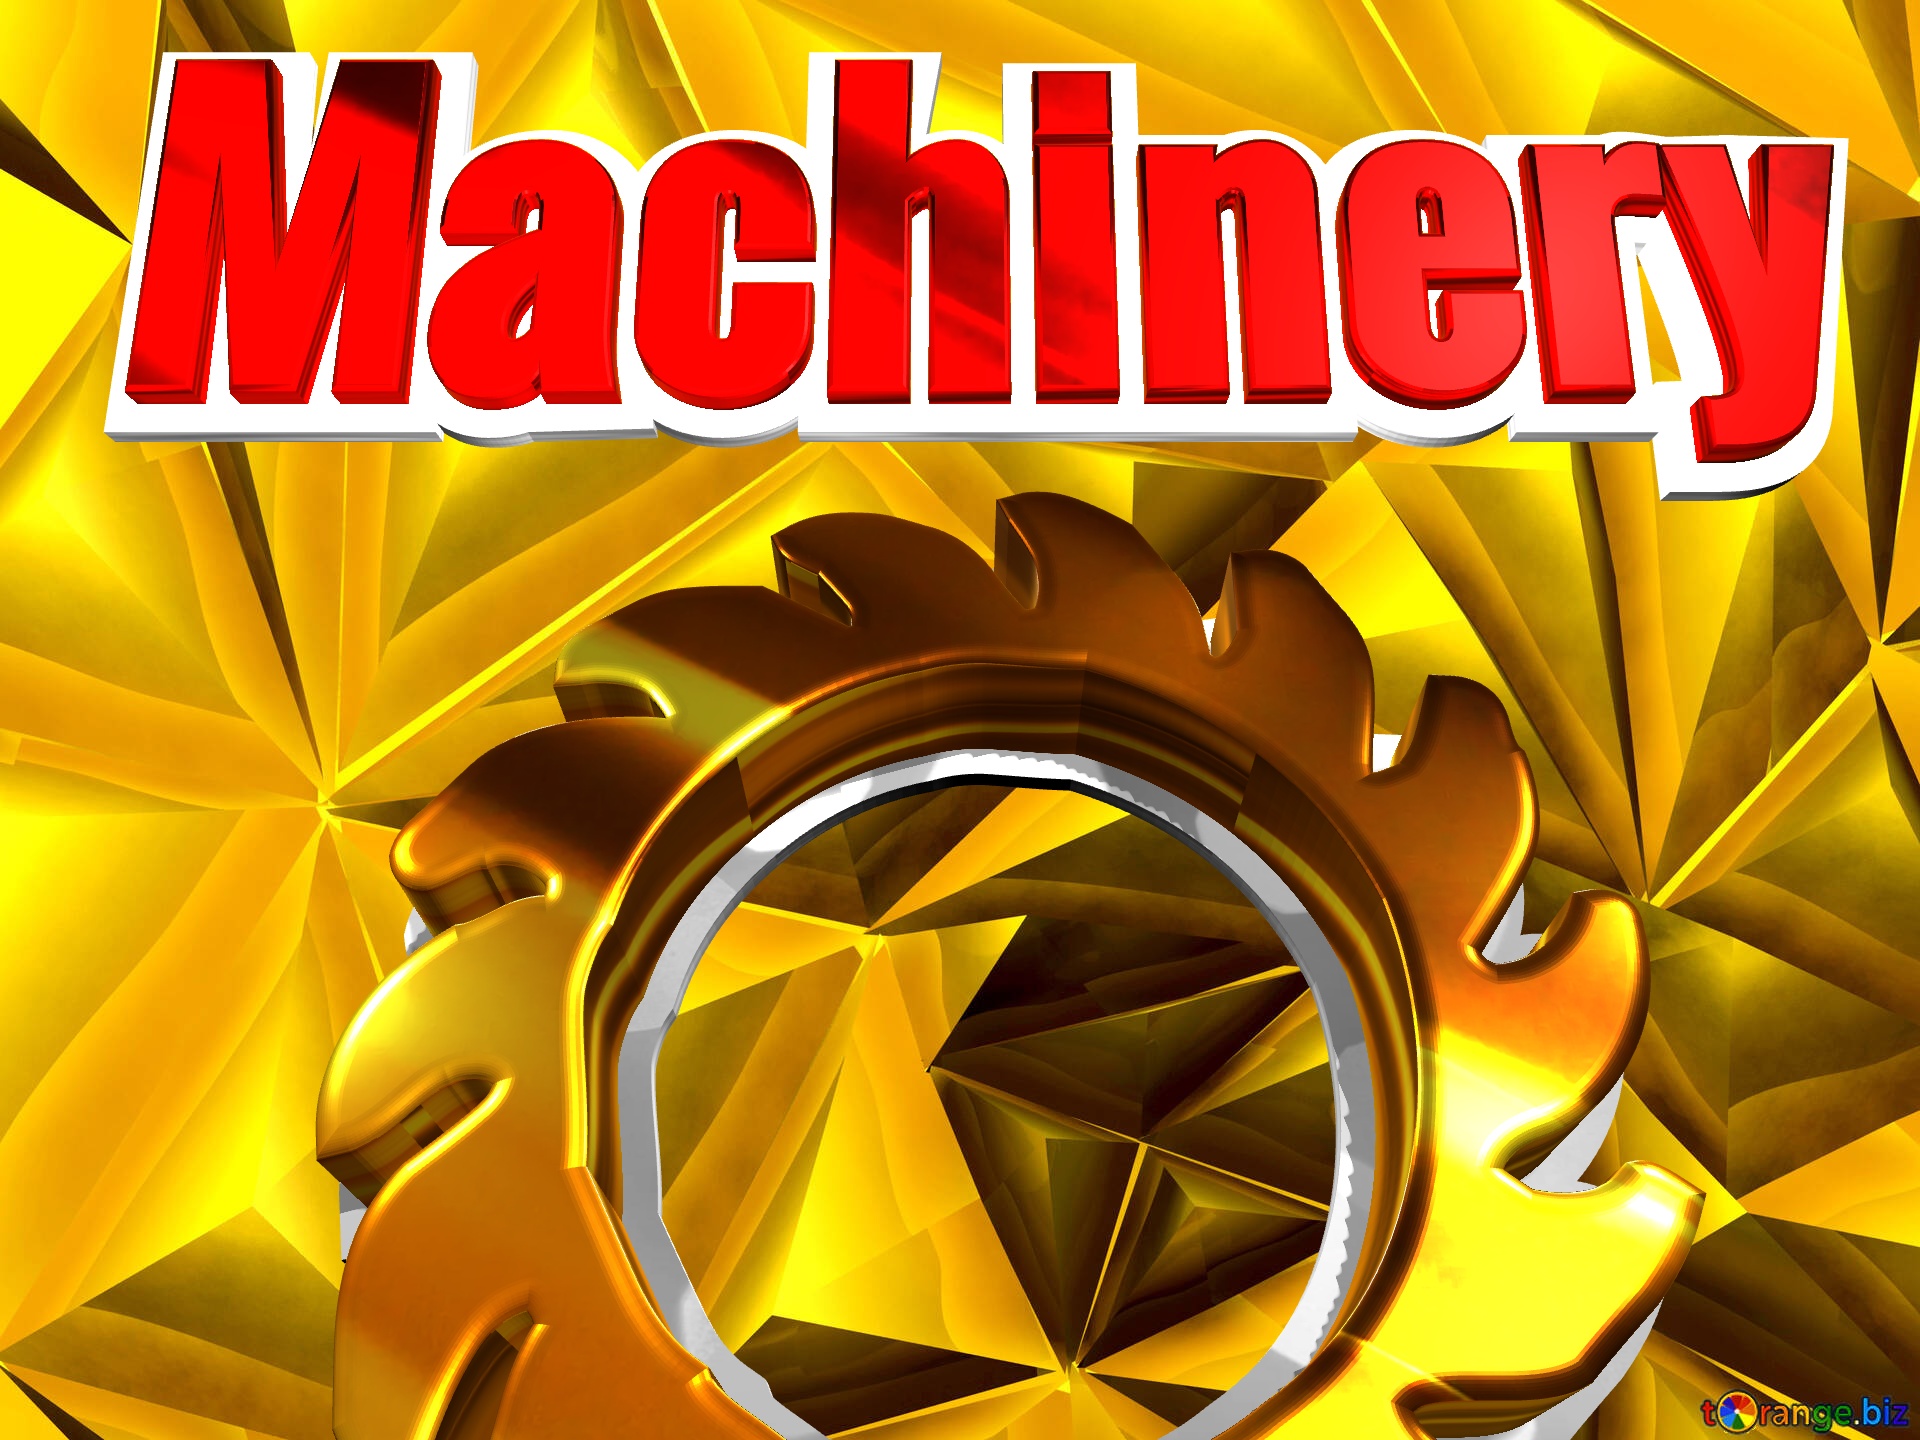 Machinery   Polygon gold background №51586